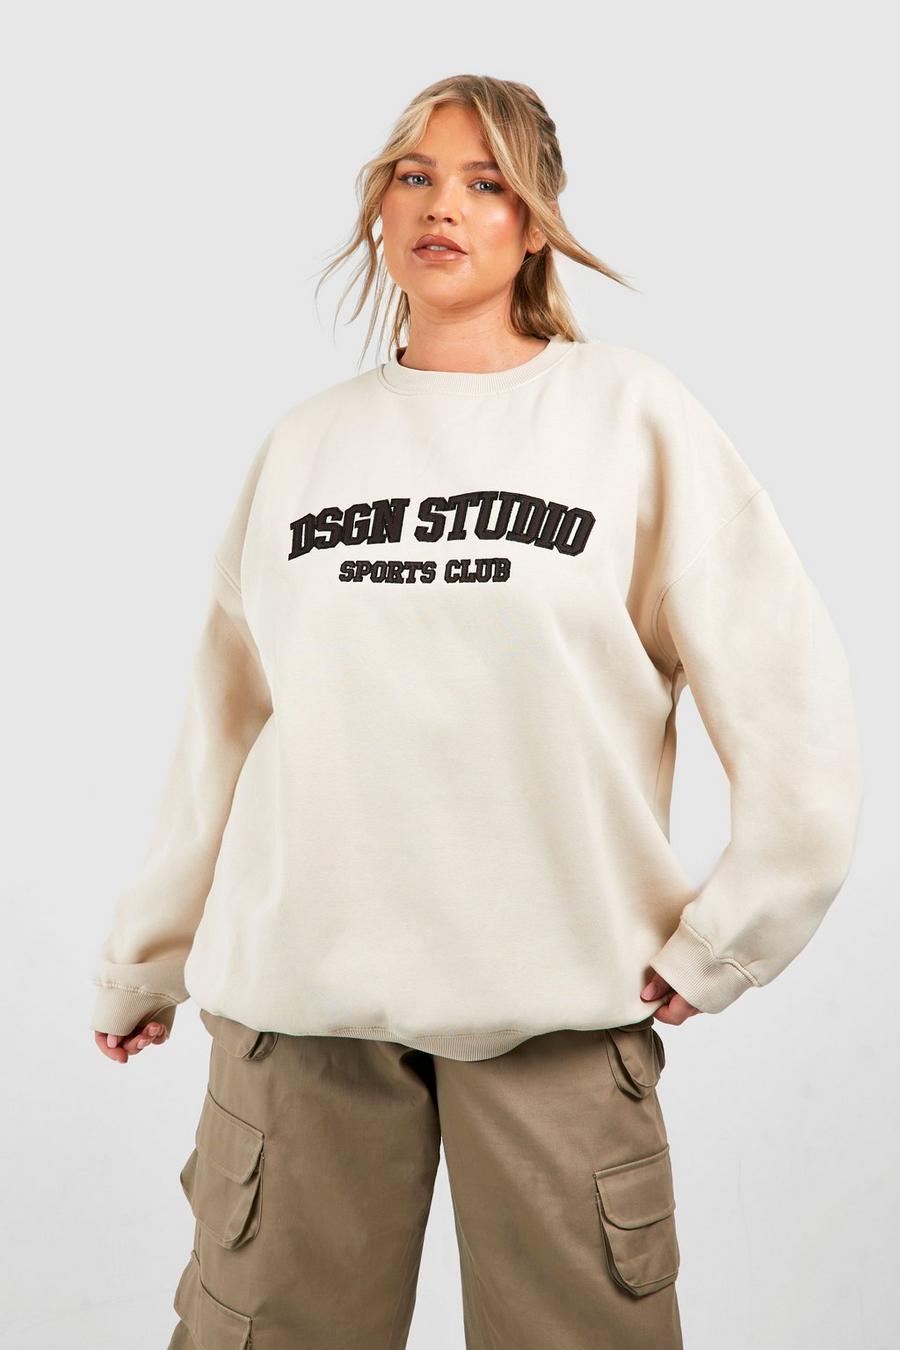 Plus Sweatshirt mit Dsgn Studio Applikation, Stone image number 1